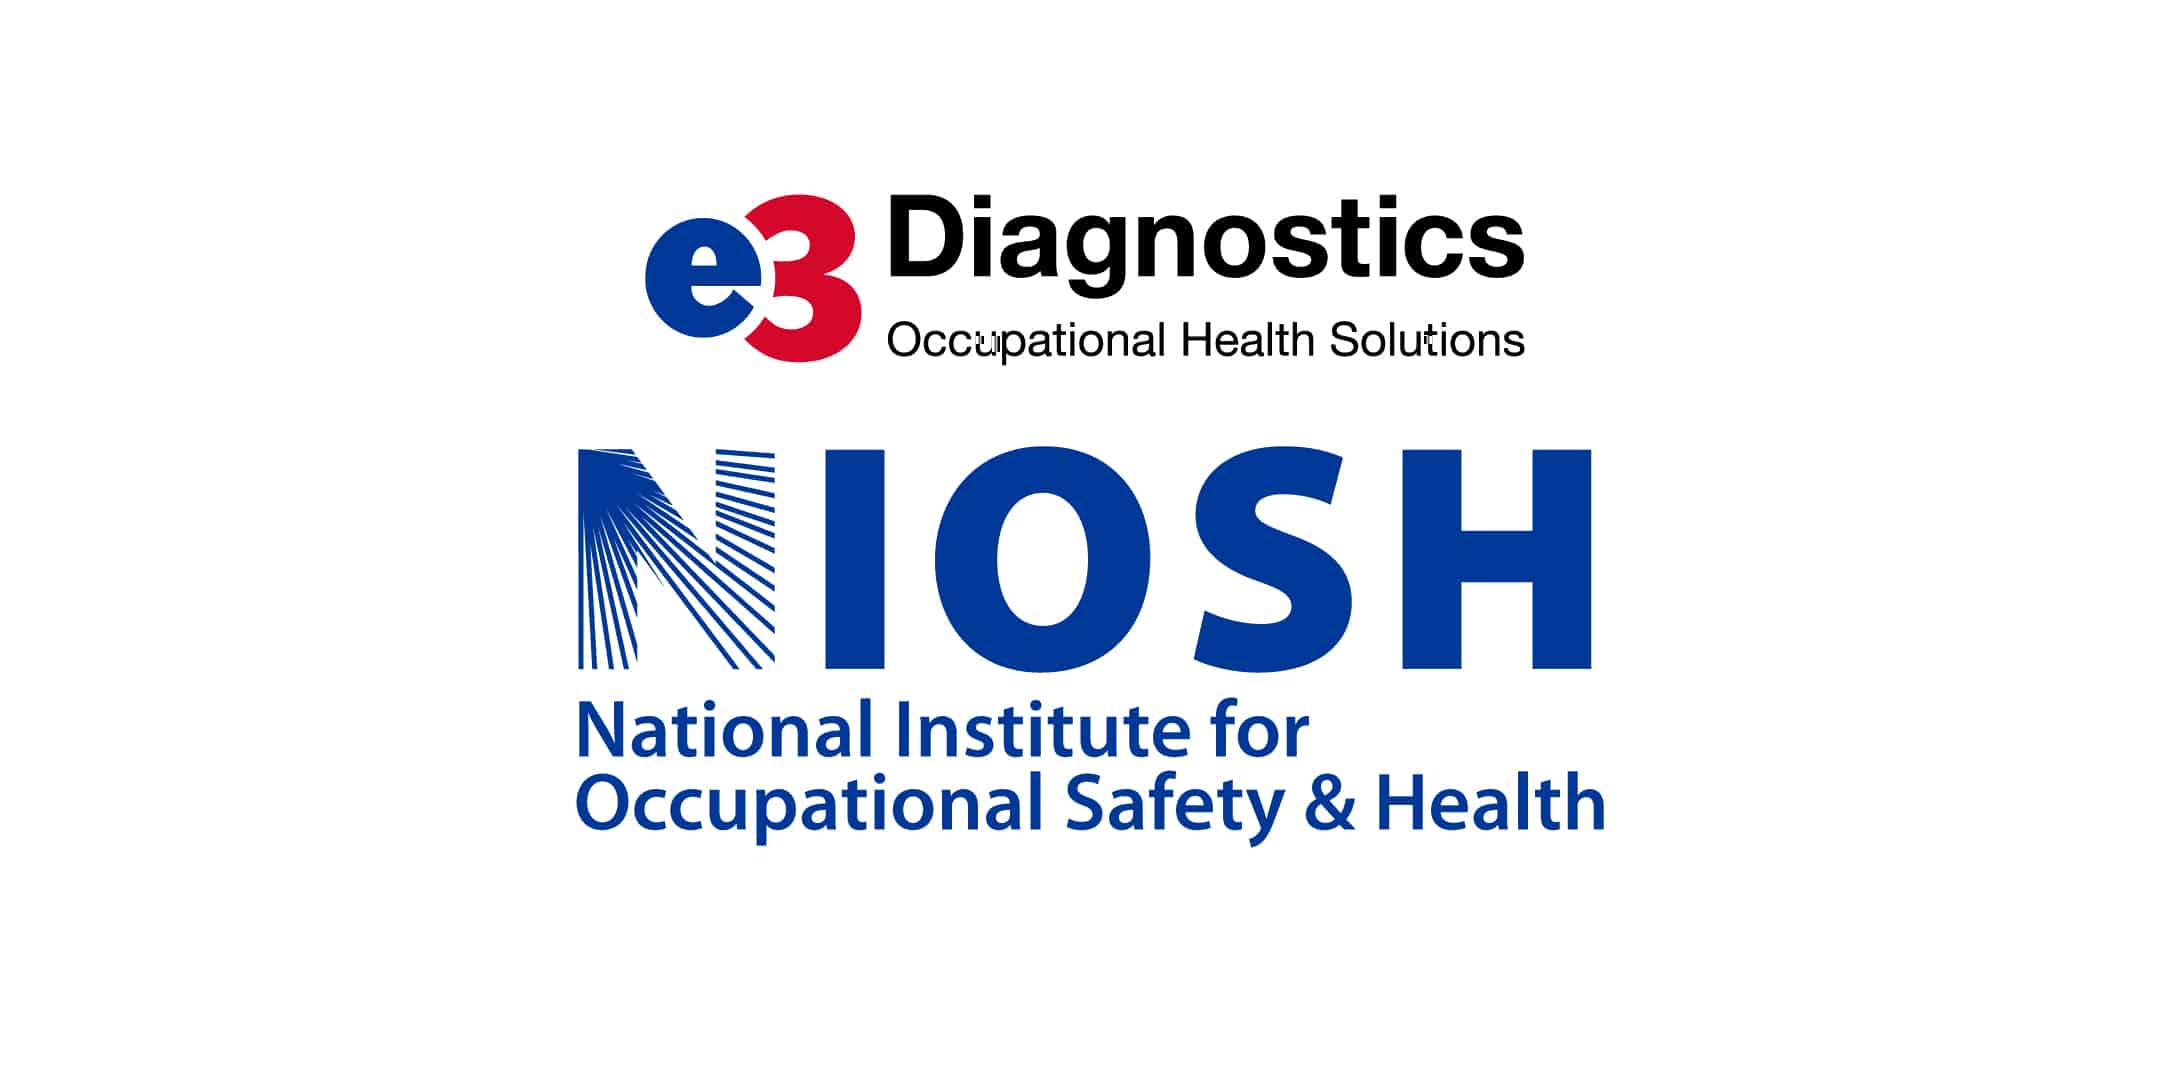 Niosh Certification With E3 Occupational 6